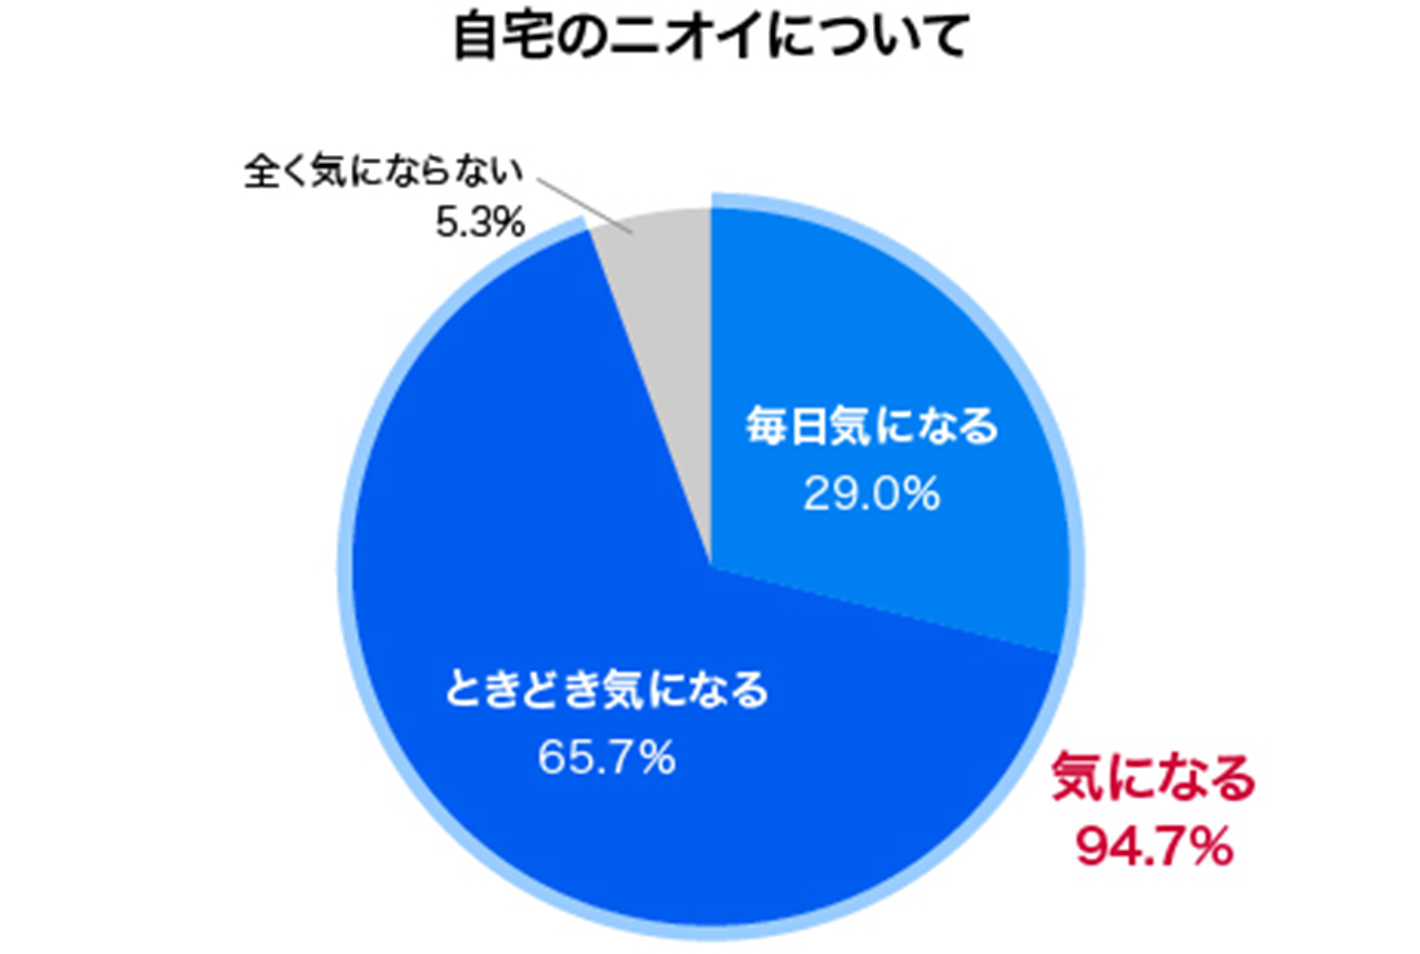 P&G「日本の家のニオイの変化に関する検証調査」グラフ